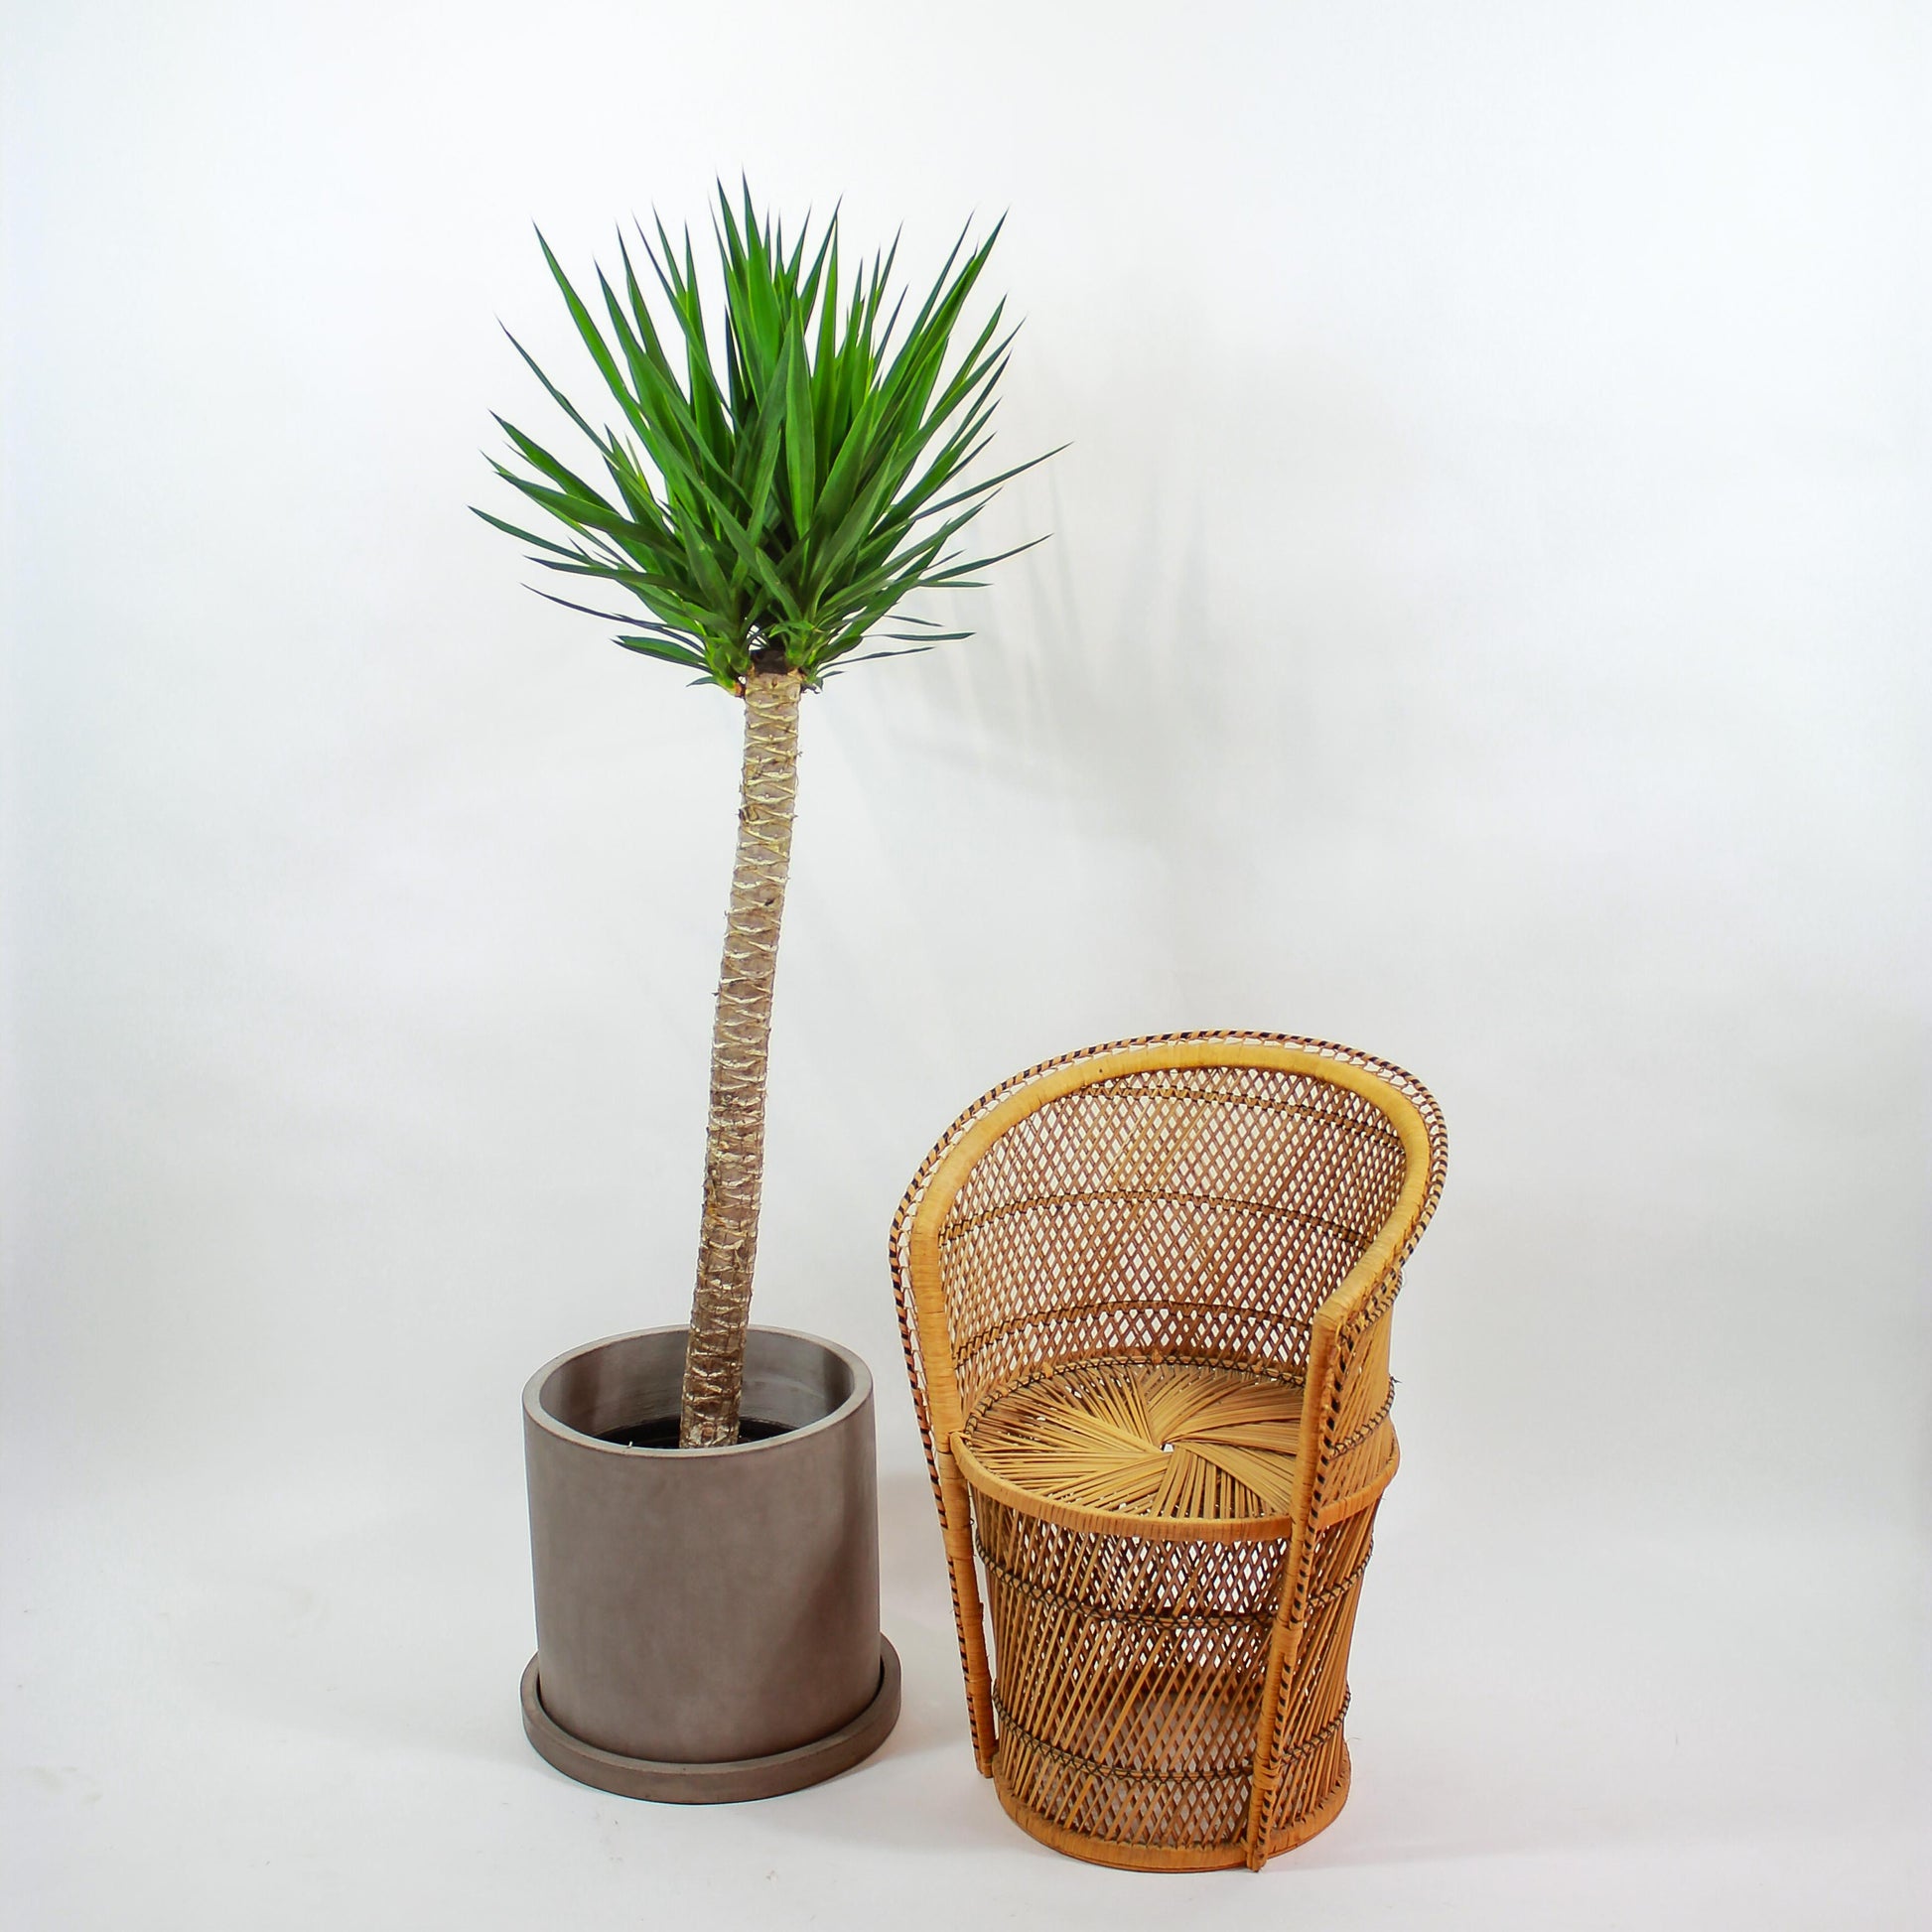 Yucca gigantea: Yucca Cane - 5-6' Tall - 12 inch pot